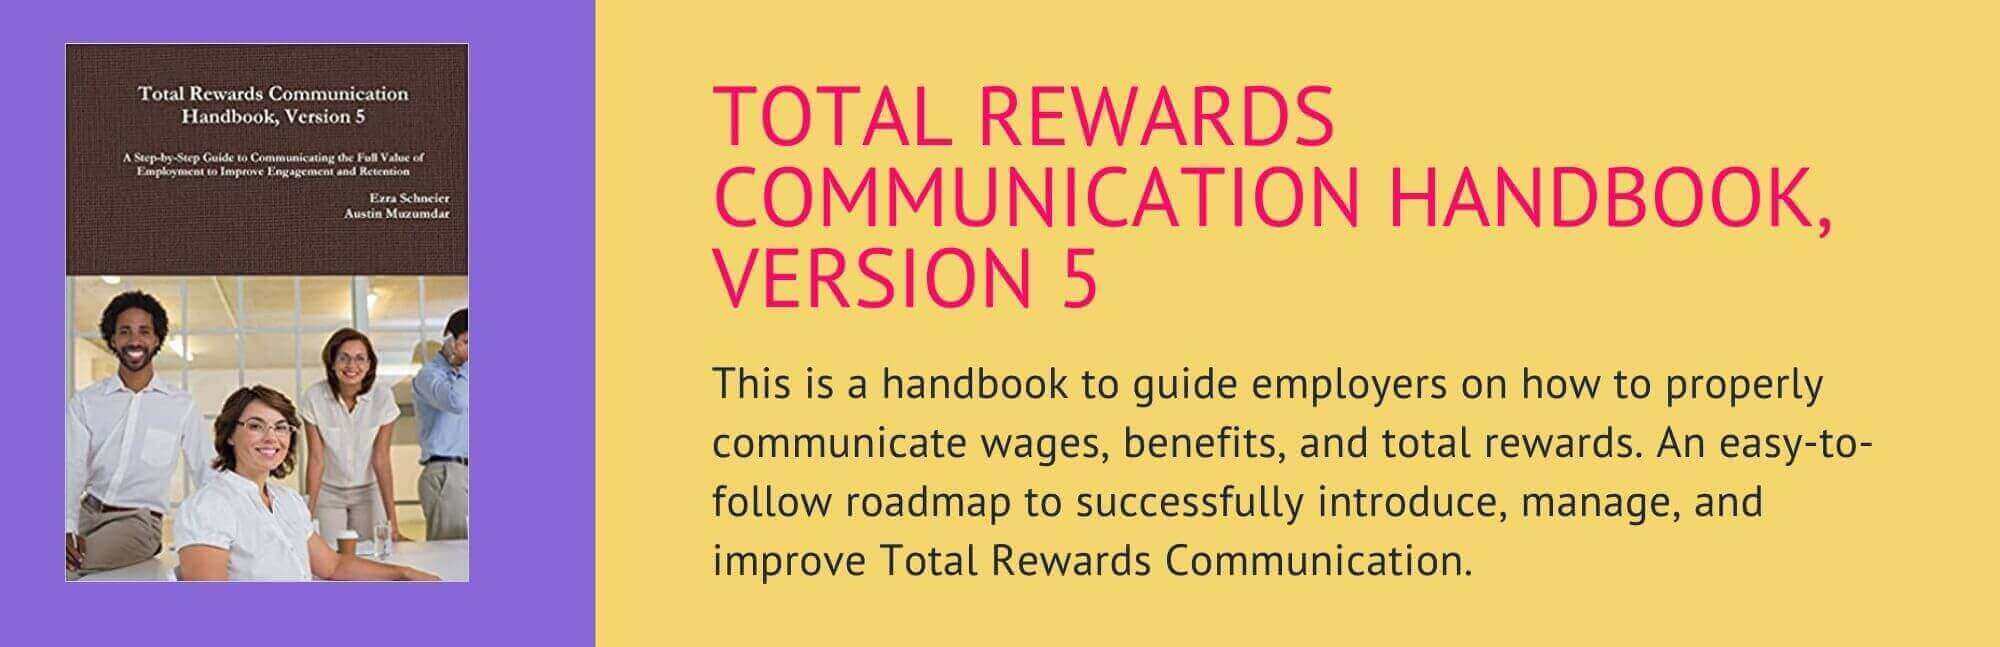 Total-rewards-communication-handbook